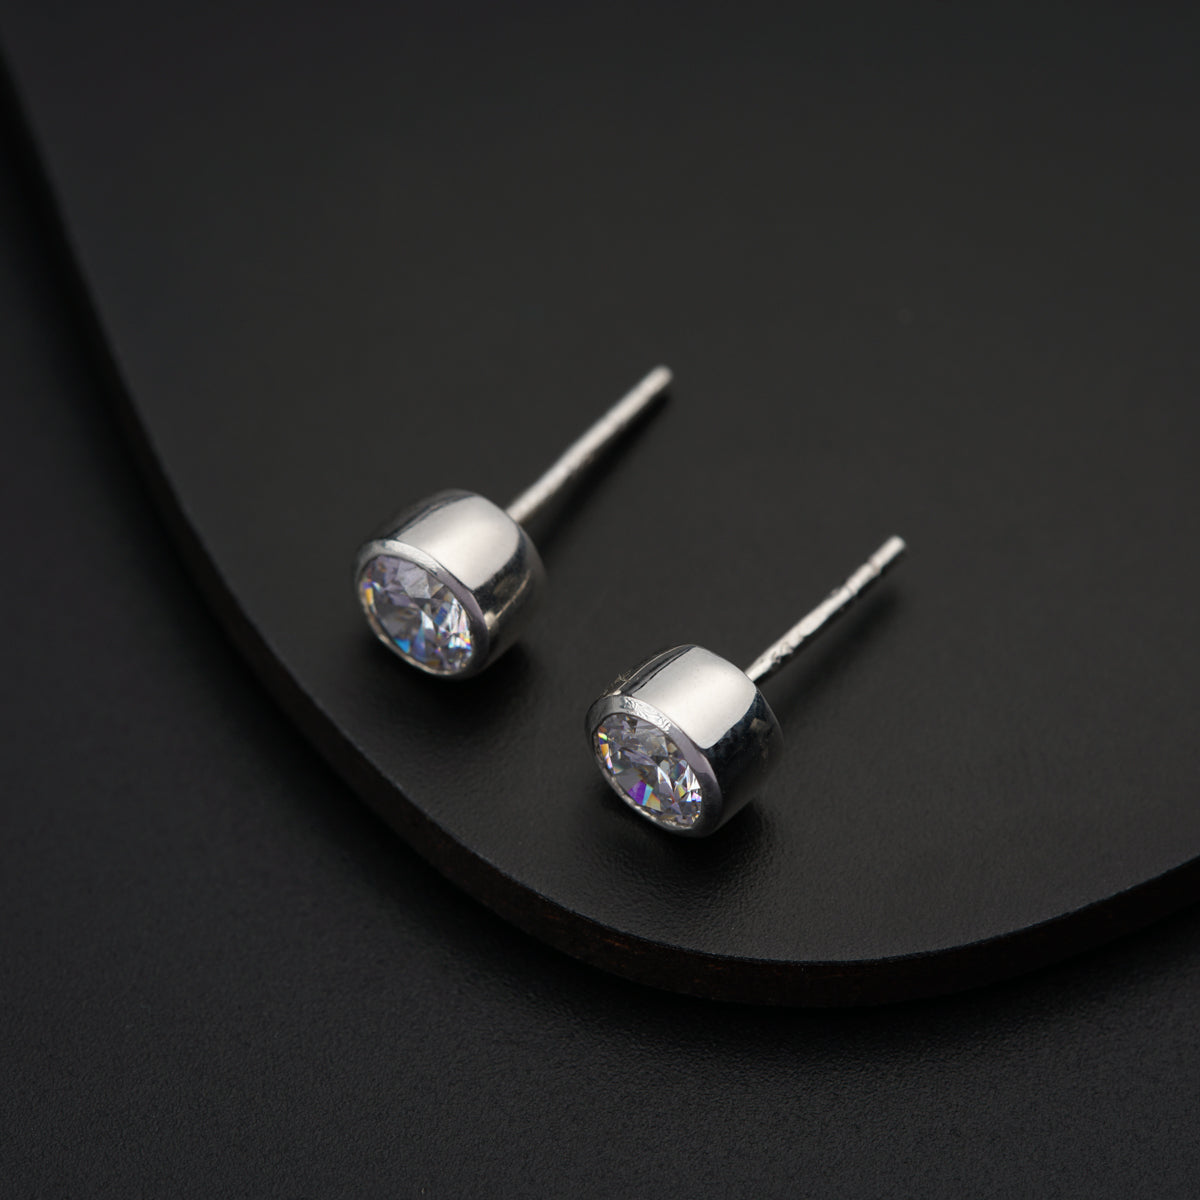 a pair of diamond earrings on a black surface